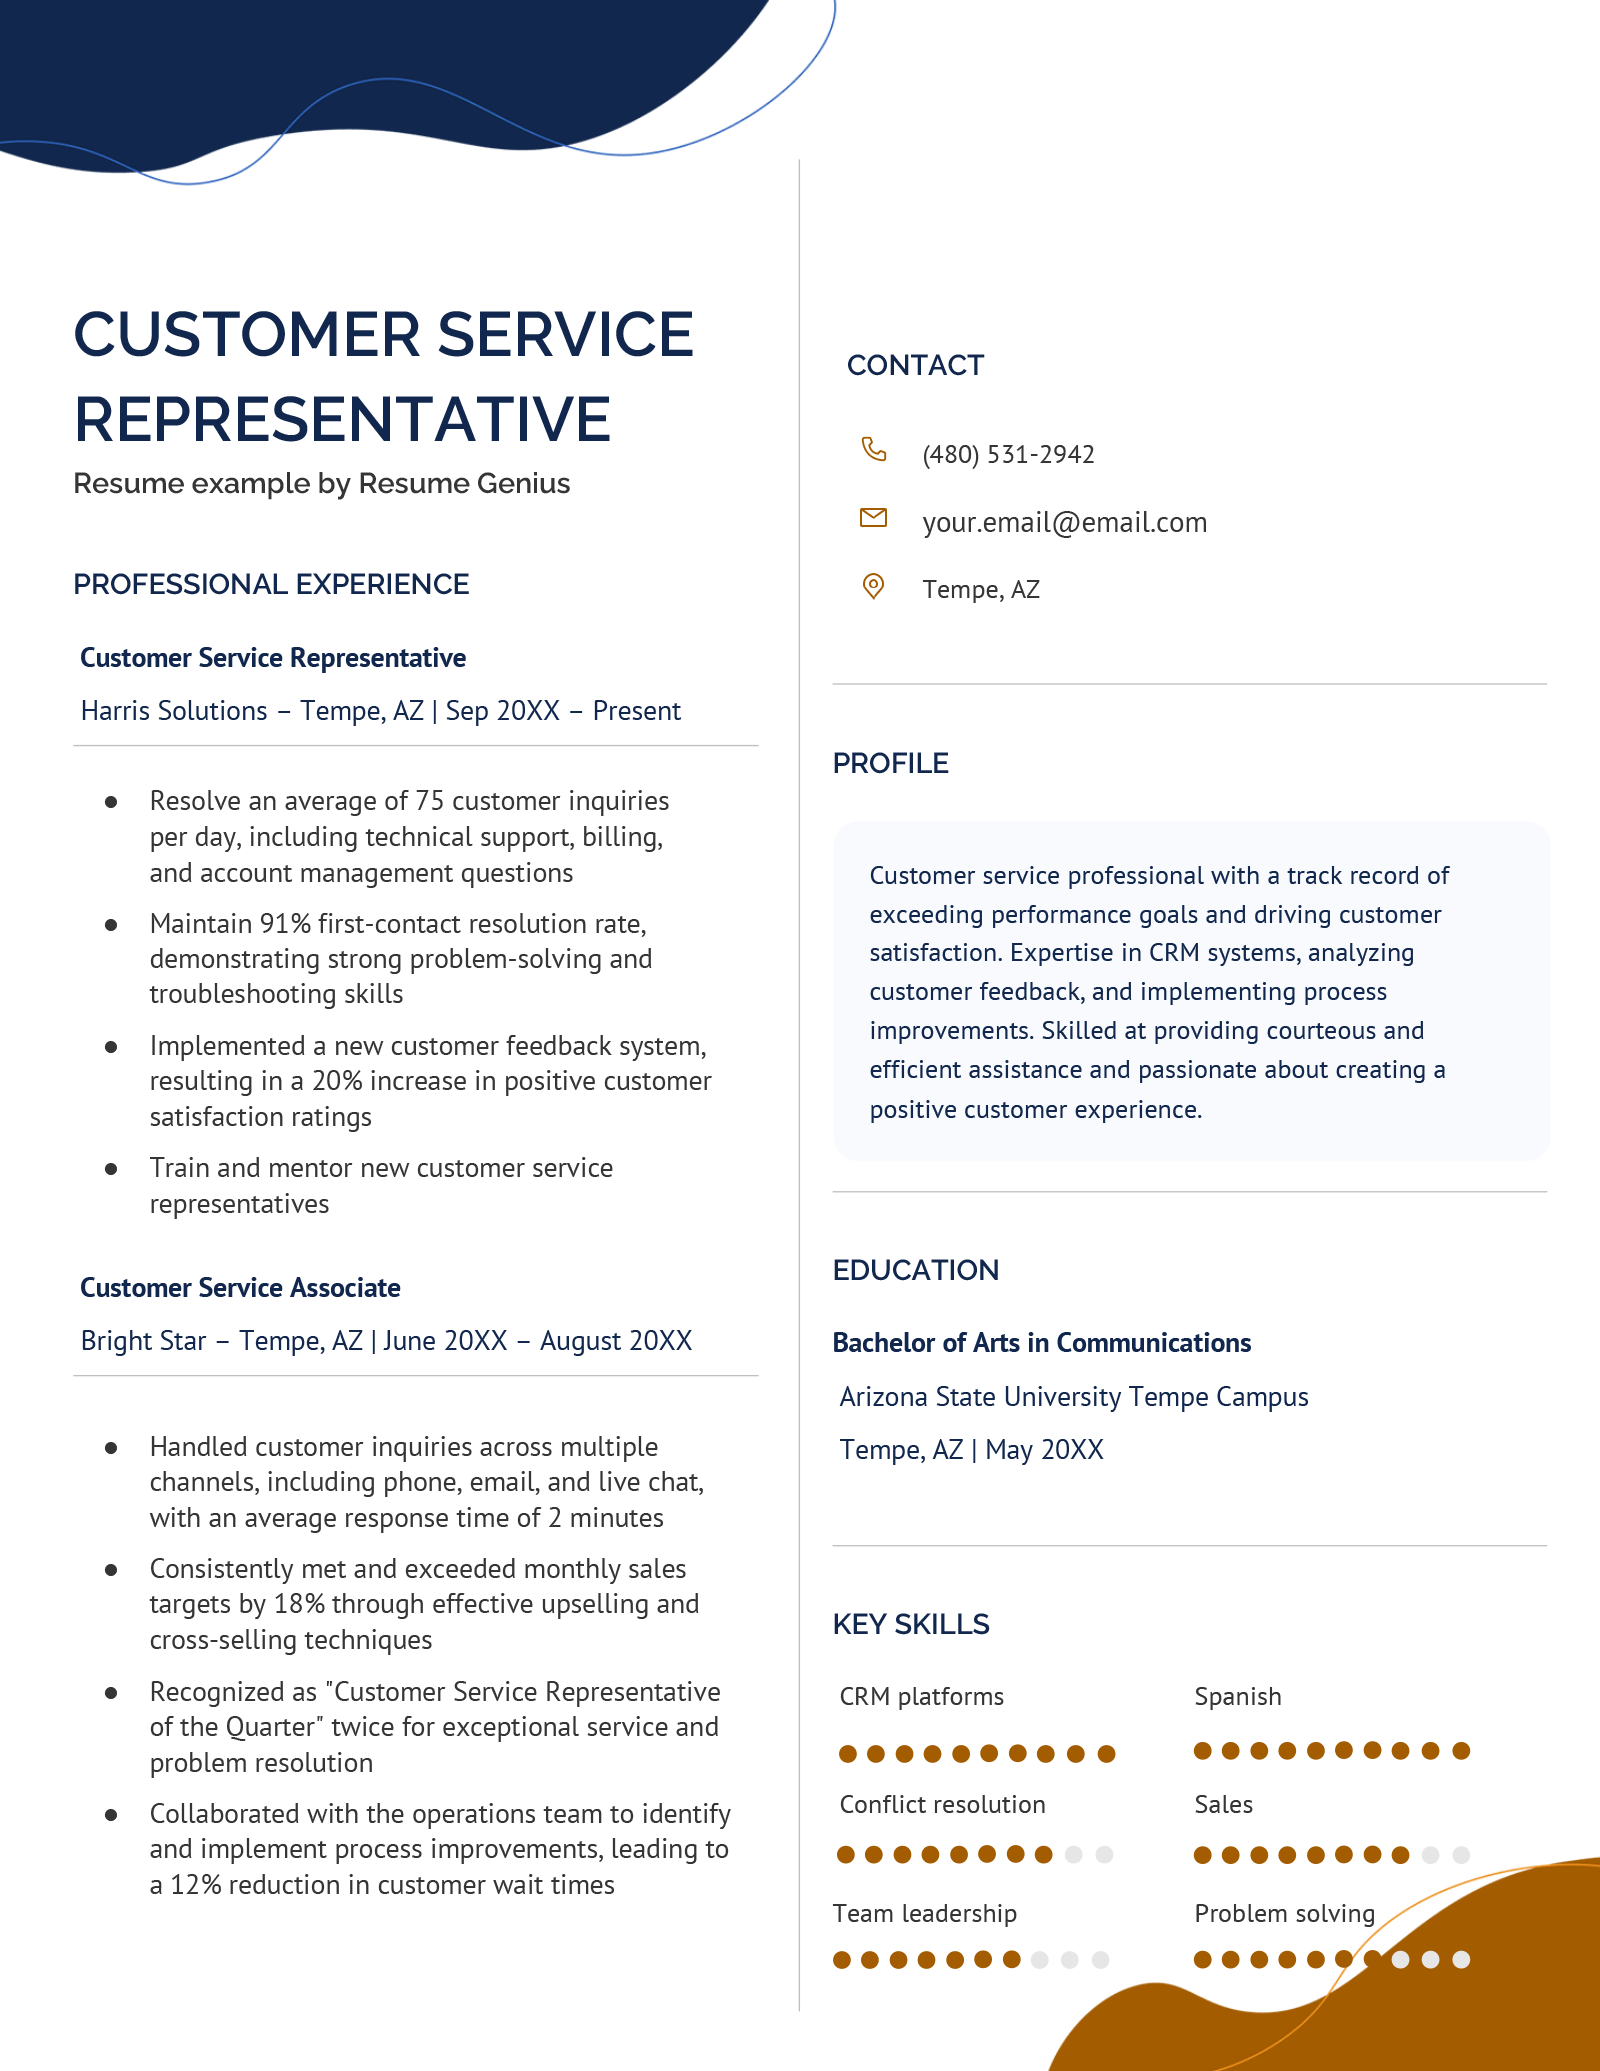 An example of a resume for a customer service representative.